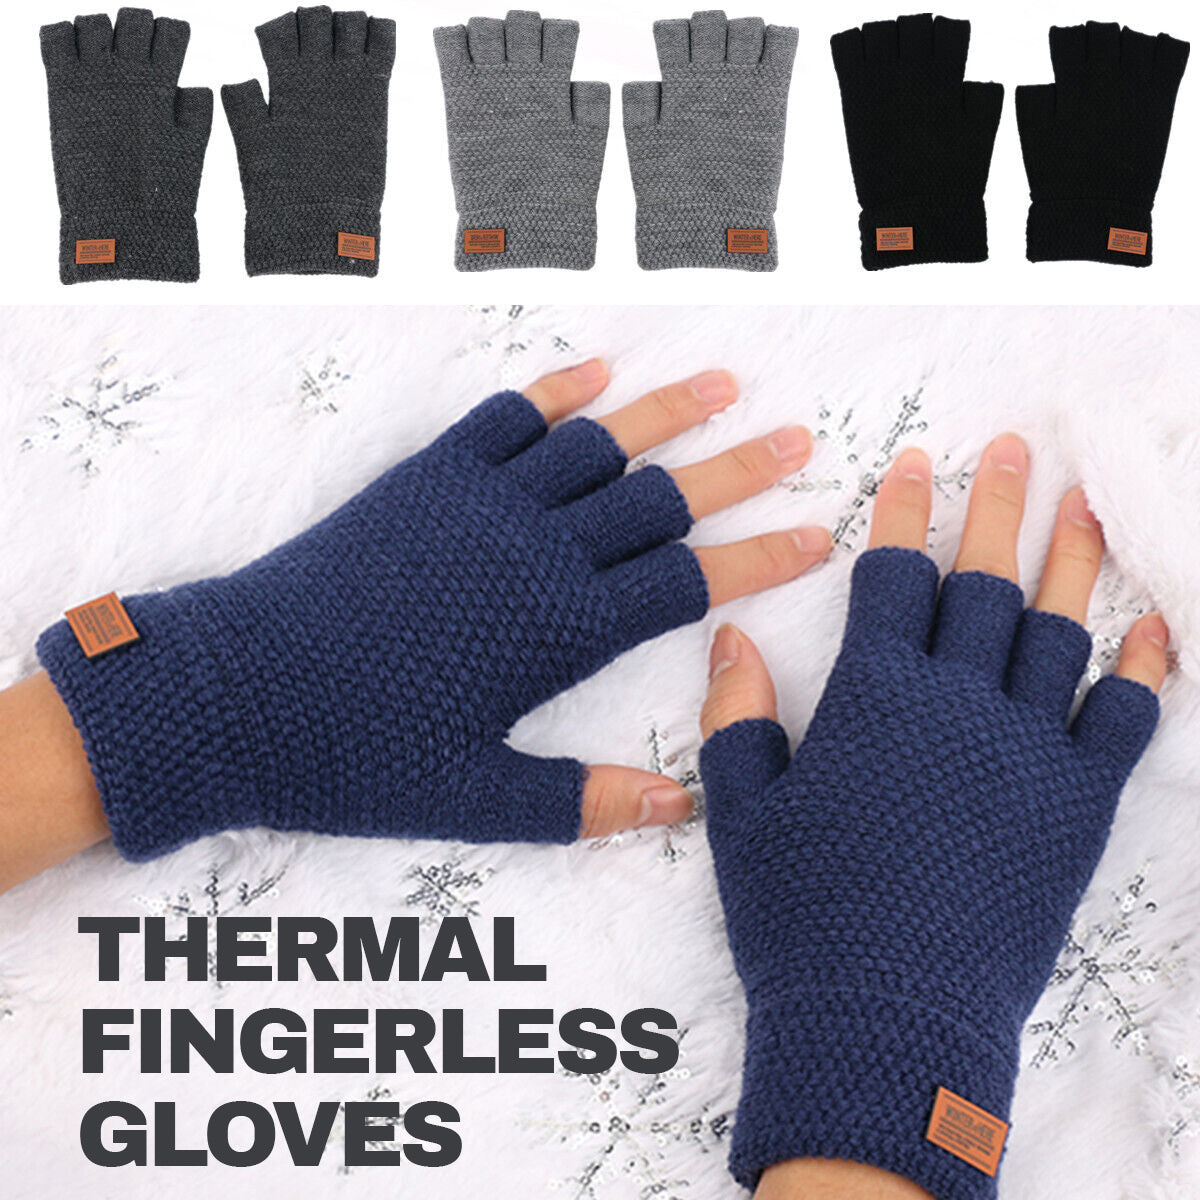 Gloves Without Fingertips - Thermal Fingerless Gloves UK